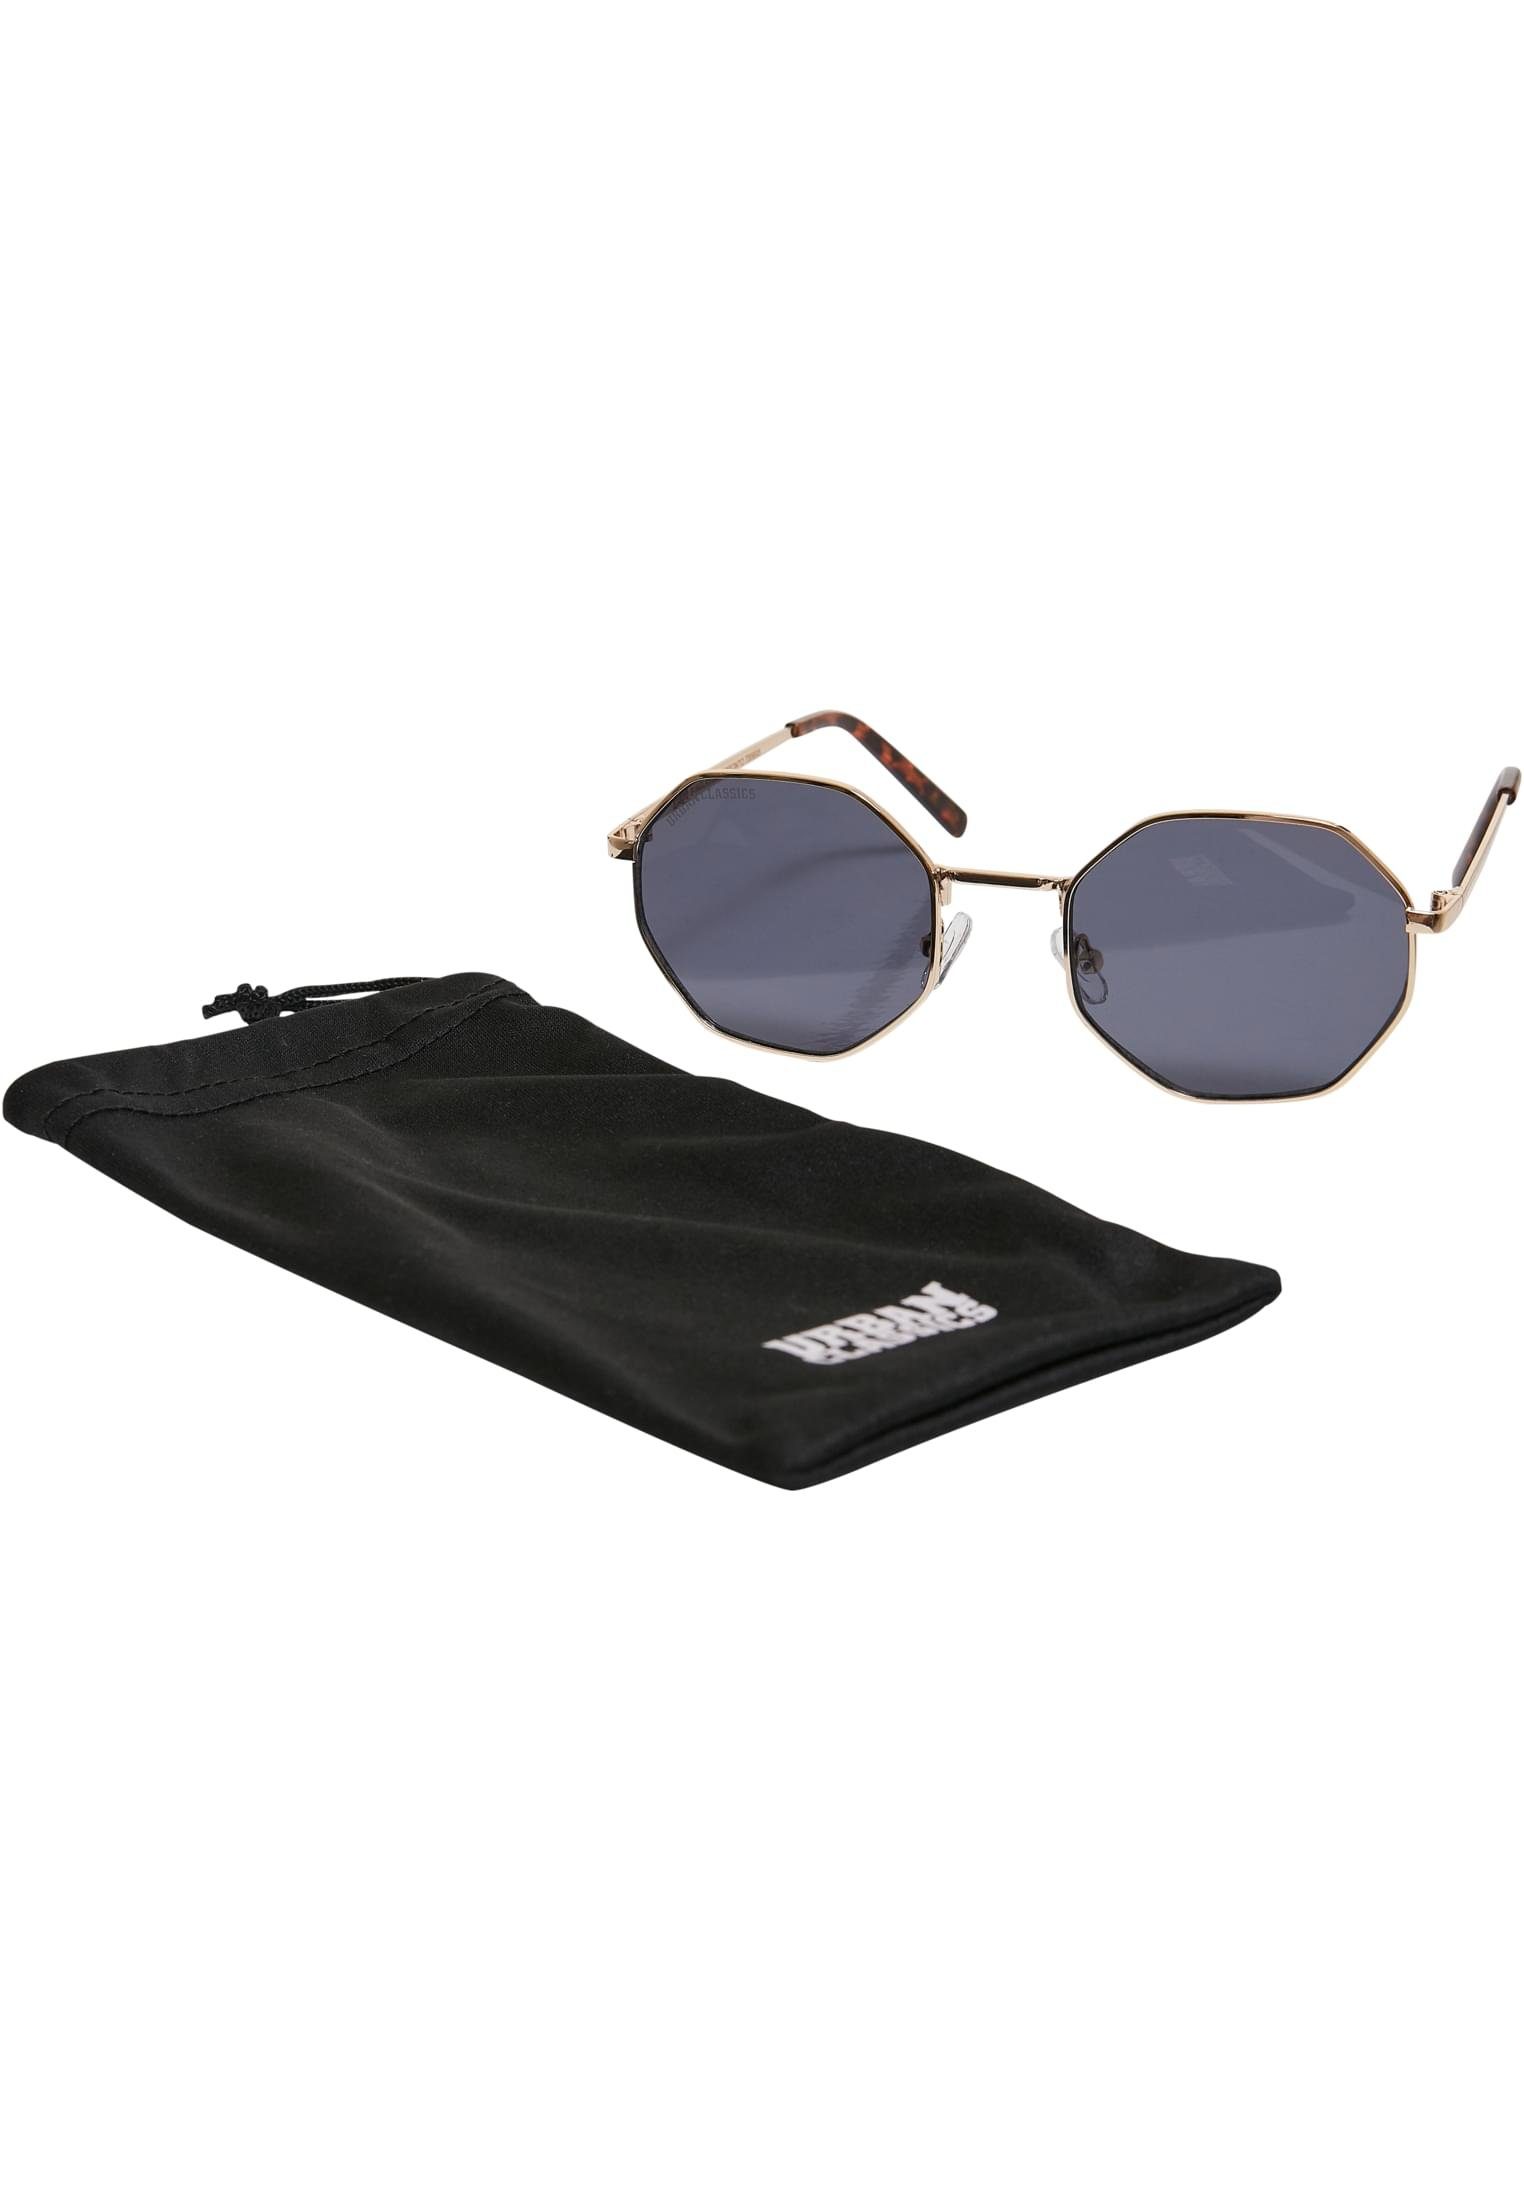 Toronto Sunglasses Unisex Sonnenbrille black/gold CLASSICS URBAN